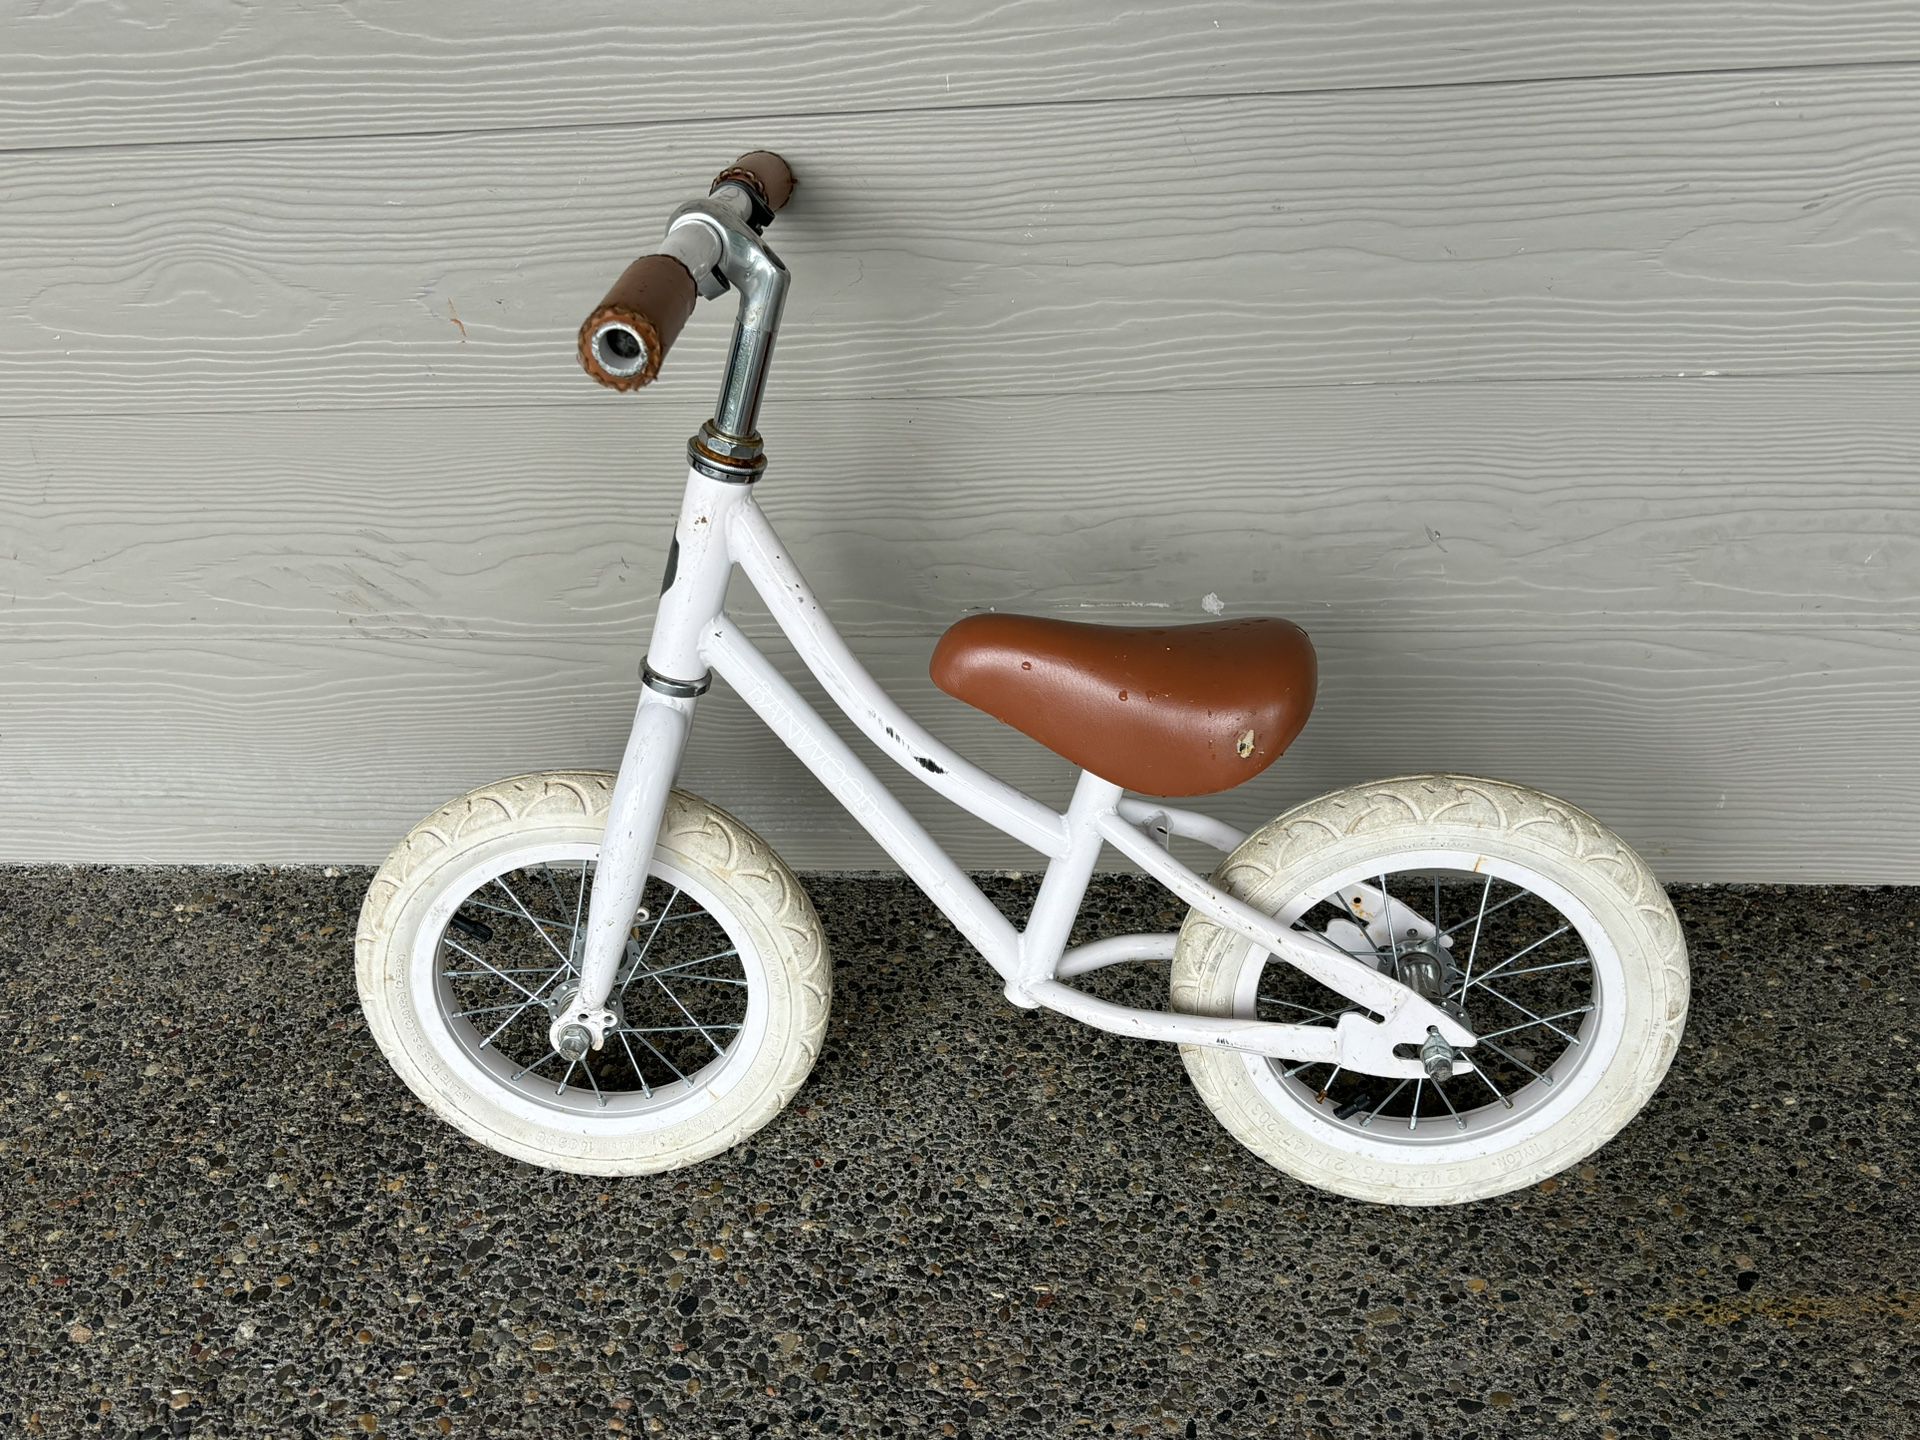 Banwood 12” strider kid bike